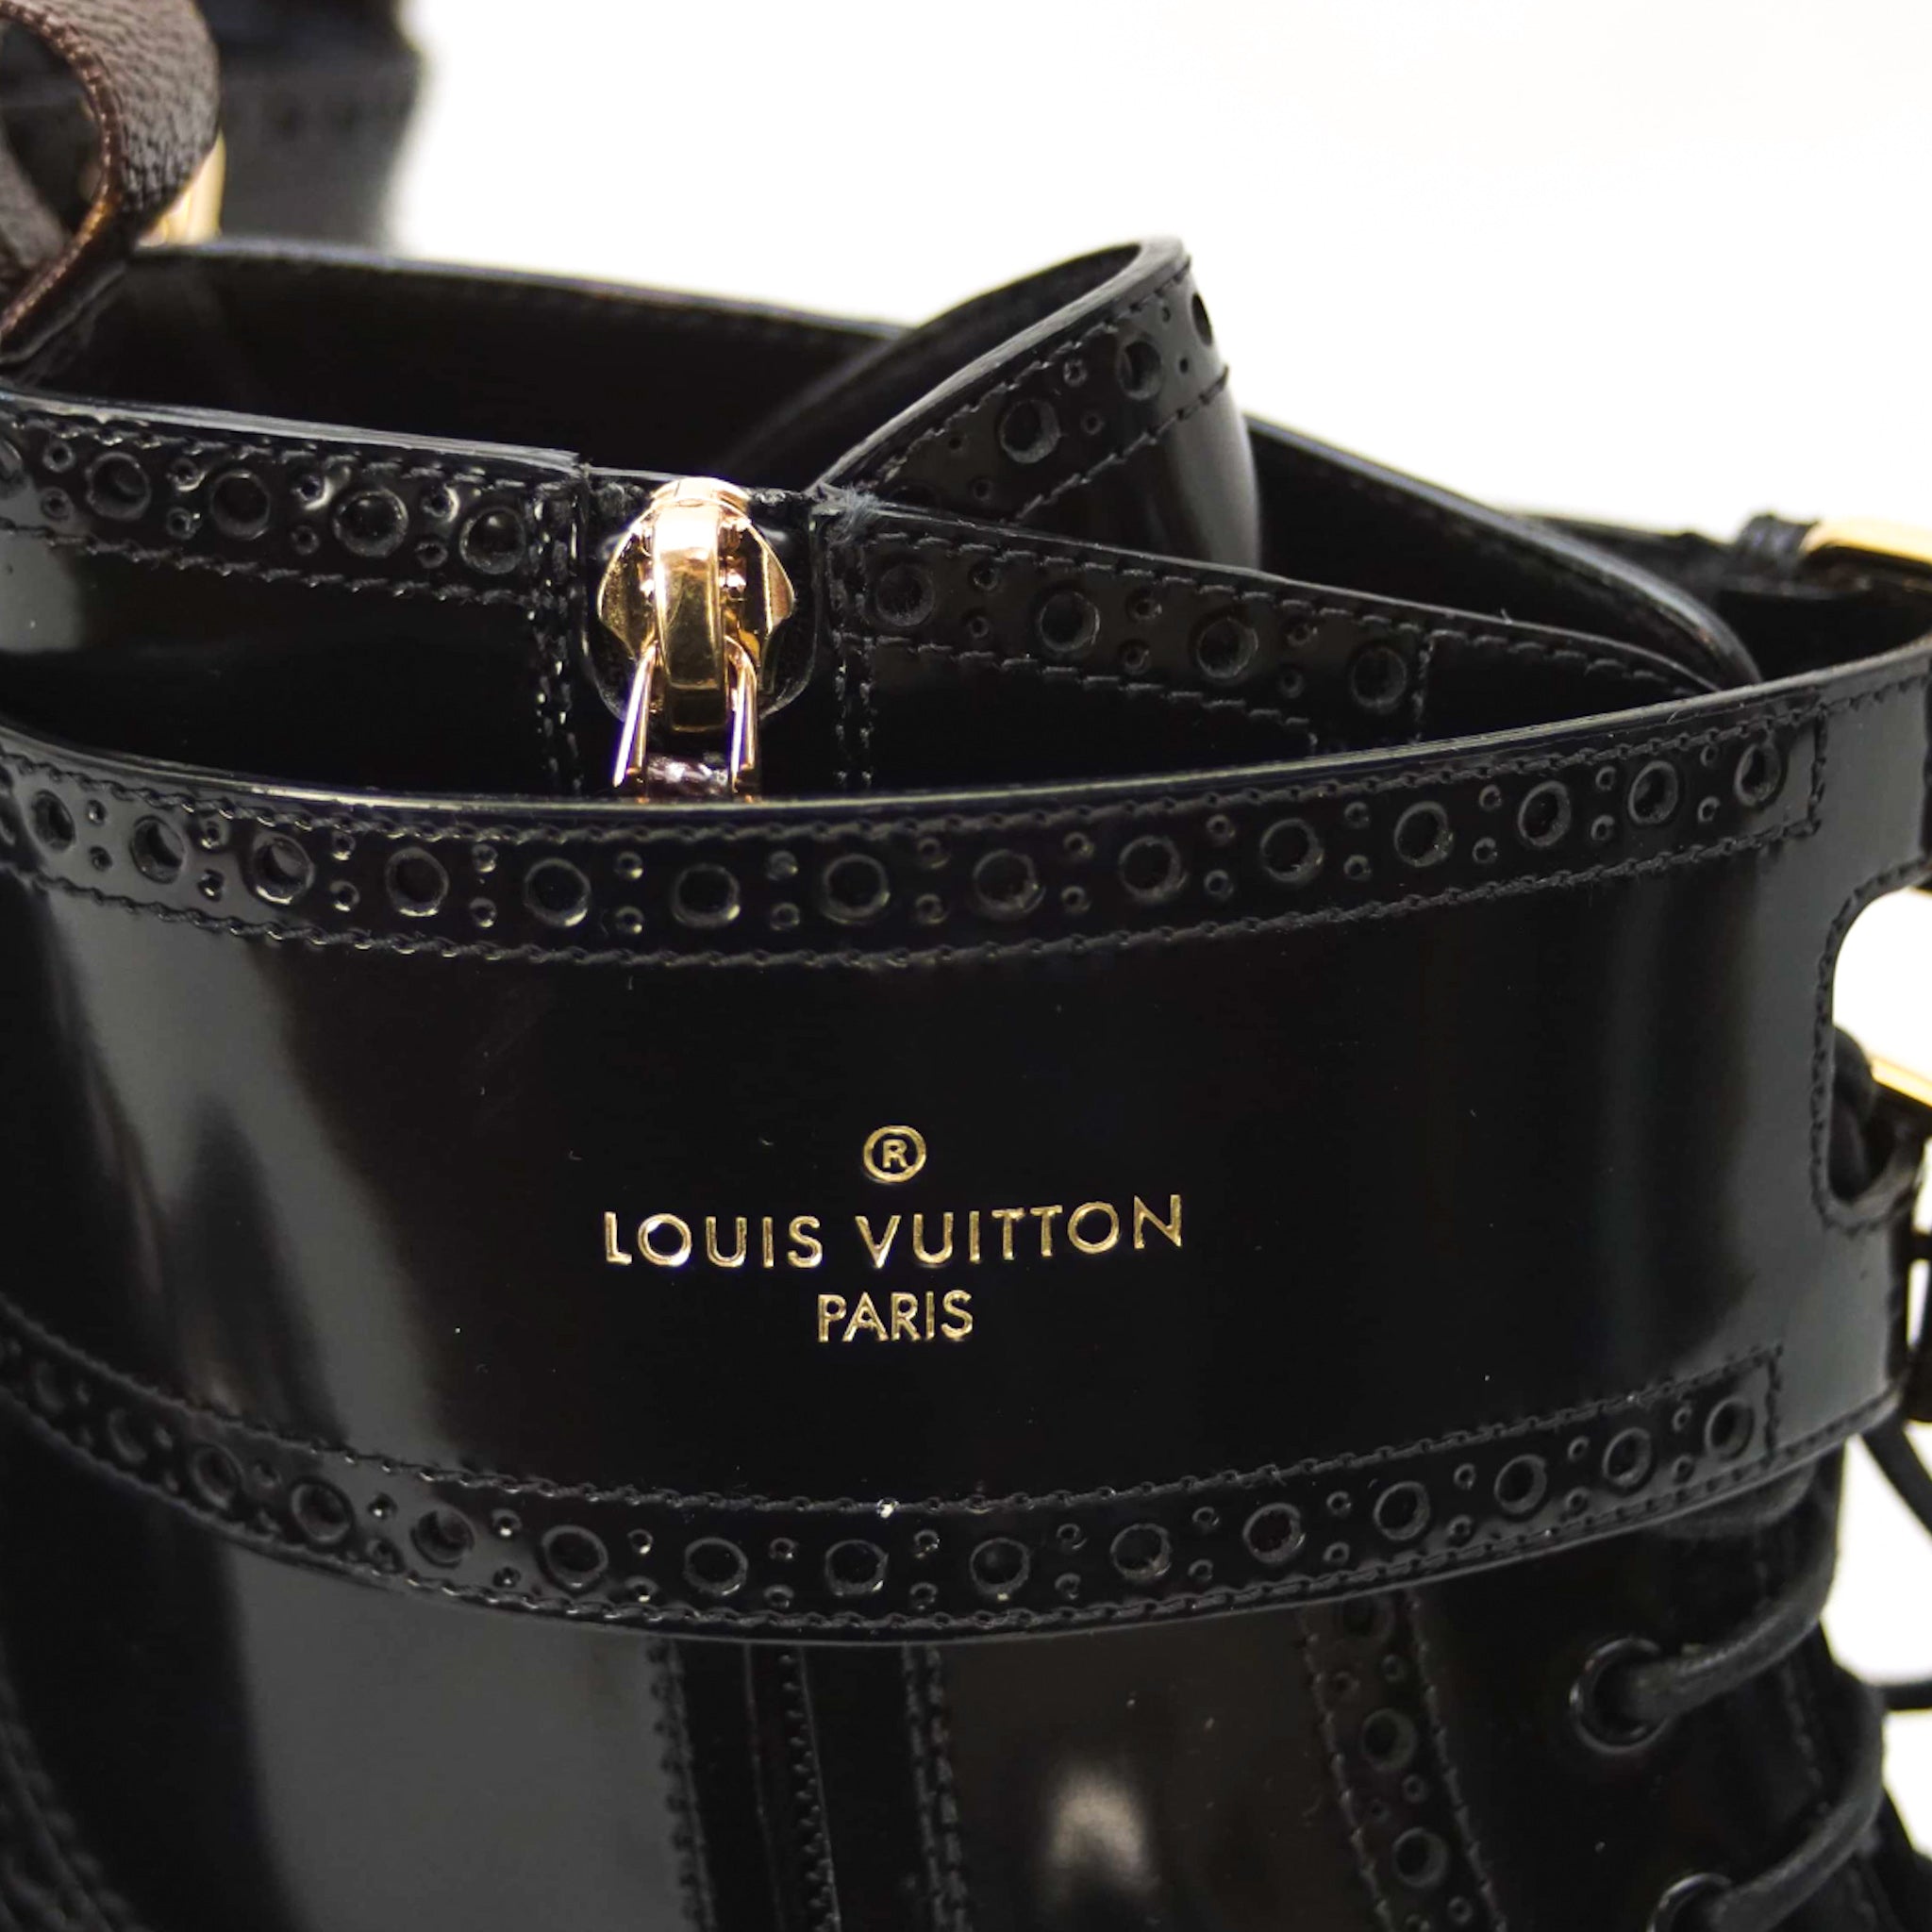 Louie Vuitton Is Aways A Good Idea (Vertical) by by Jodi - Graphic Art Mercer41 Format: Black Framed, Size: 27.5 H x 21.5 W x 0.75 D